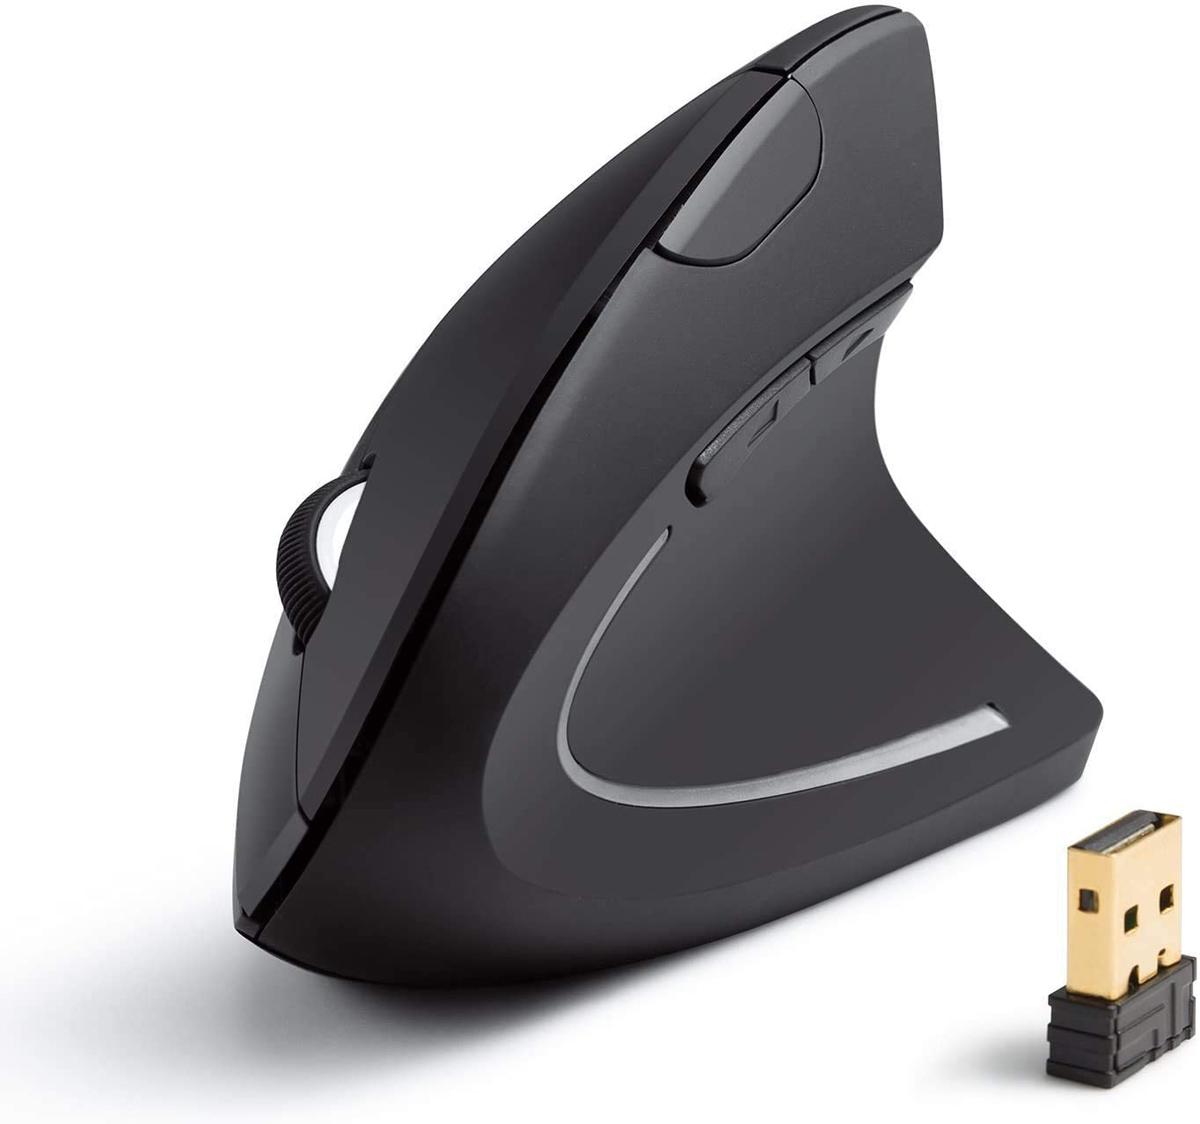 Anker 2.4G Wireless Vertical Ergonomic Optical Mouse for $14.99